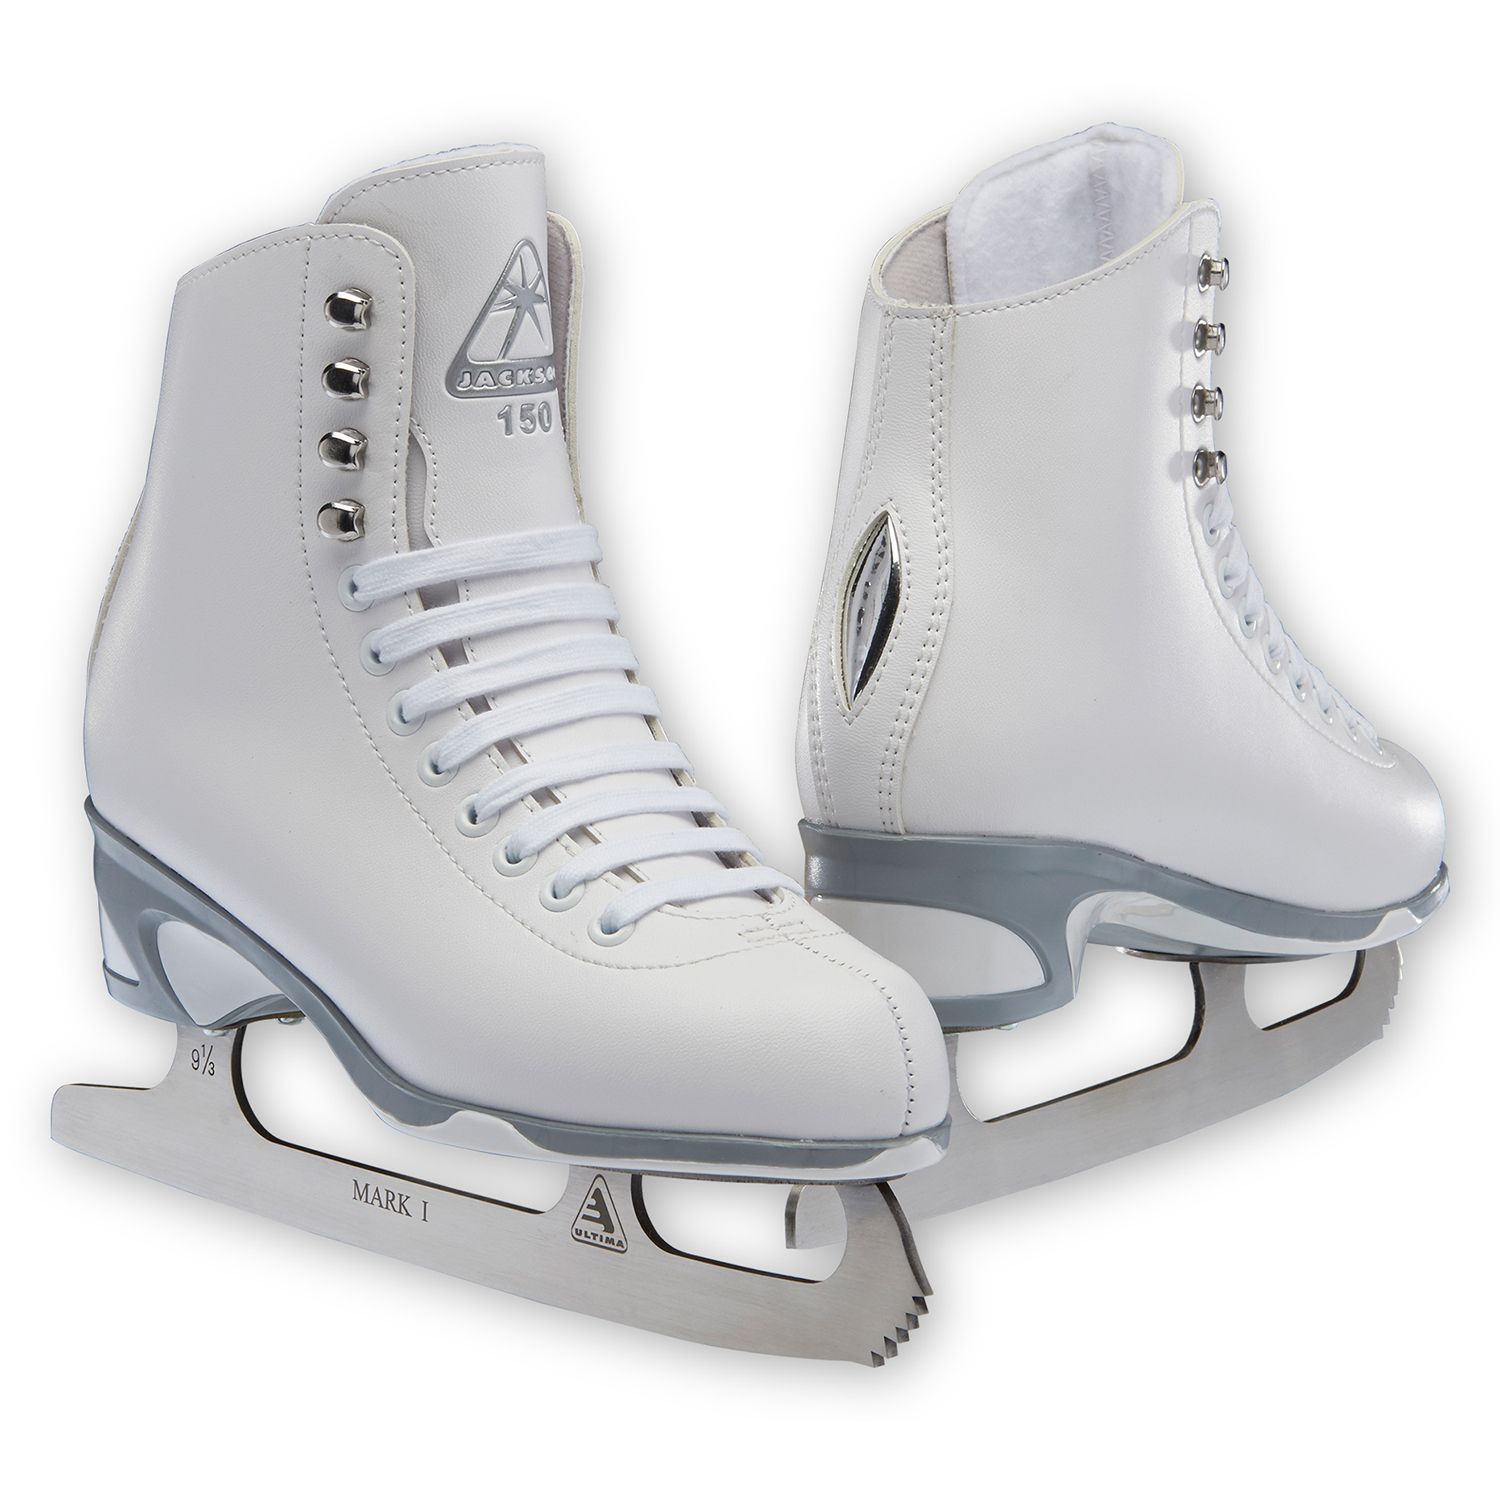 skates ice women's